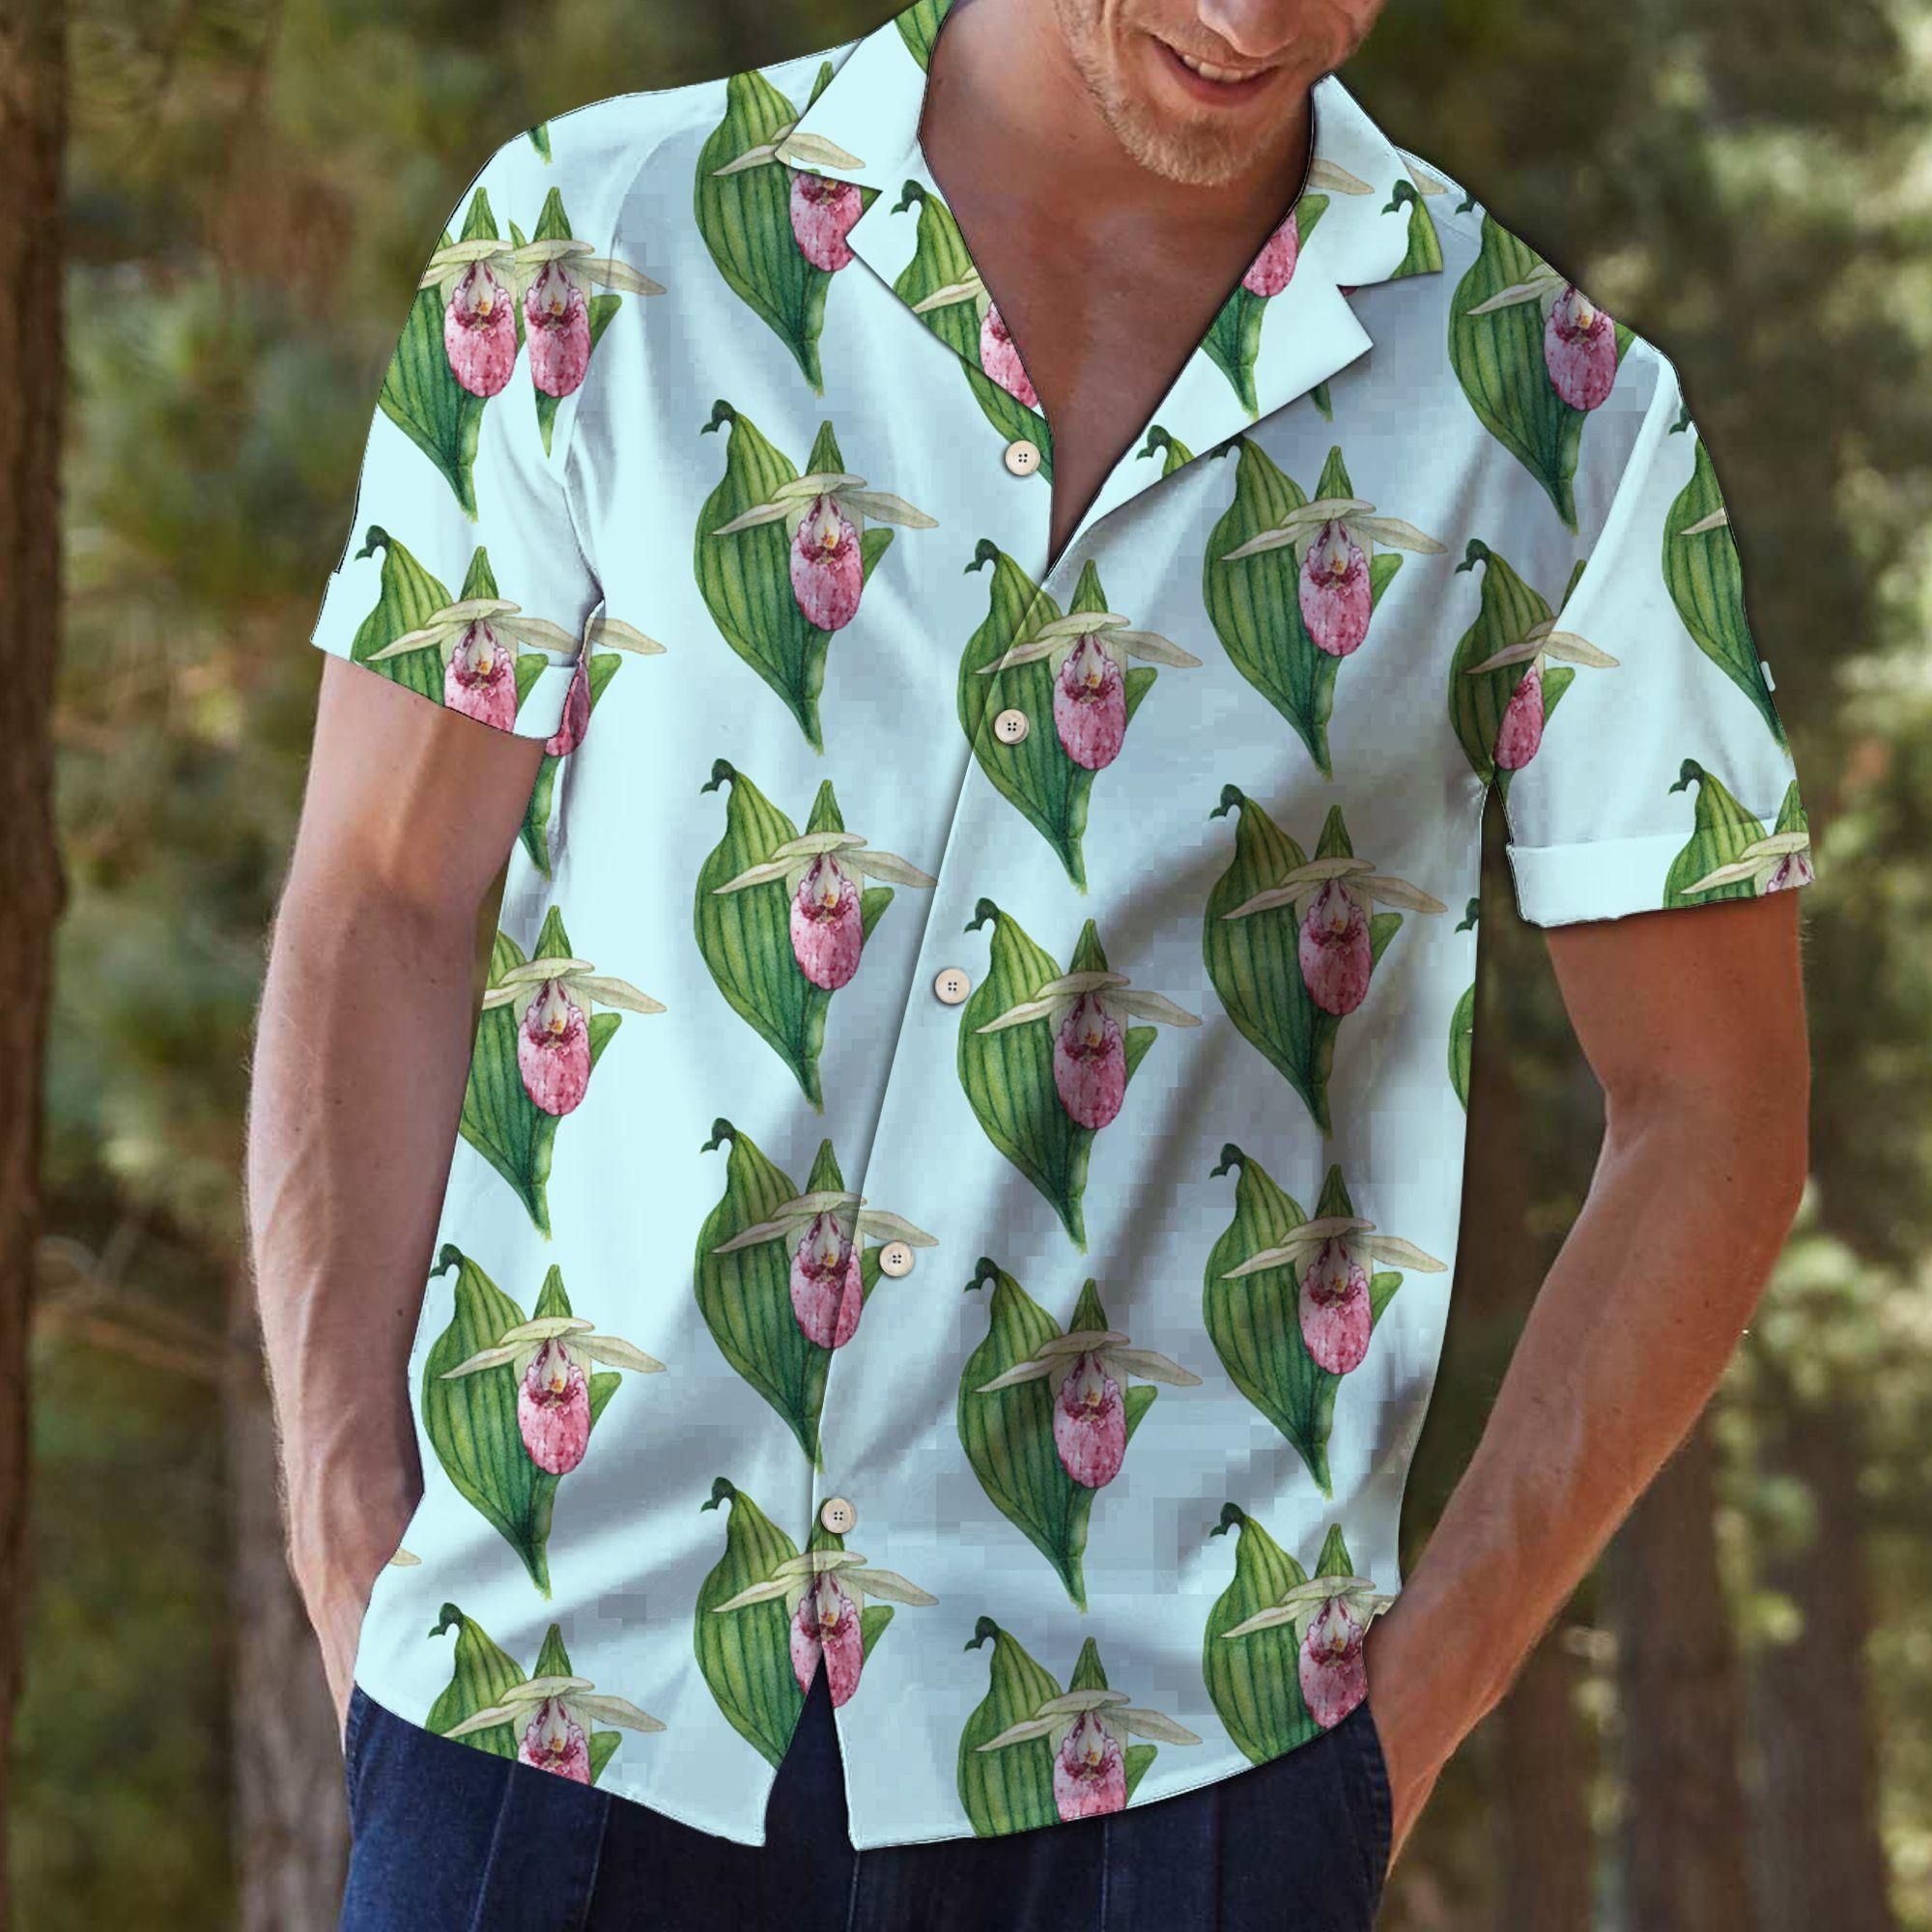 Minnesota Pink And White Lady’S Slipper Aloha Hawaiian Shirt Colorful Short Sleeve Summer Beach Casual Shirt For Men And Women